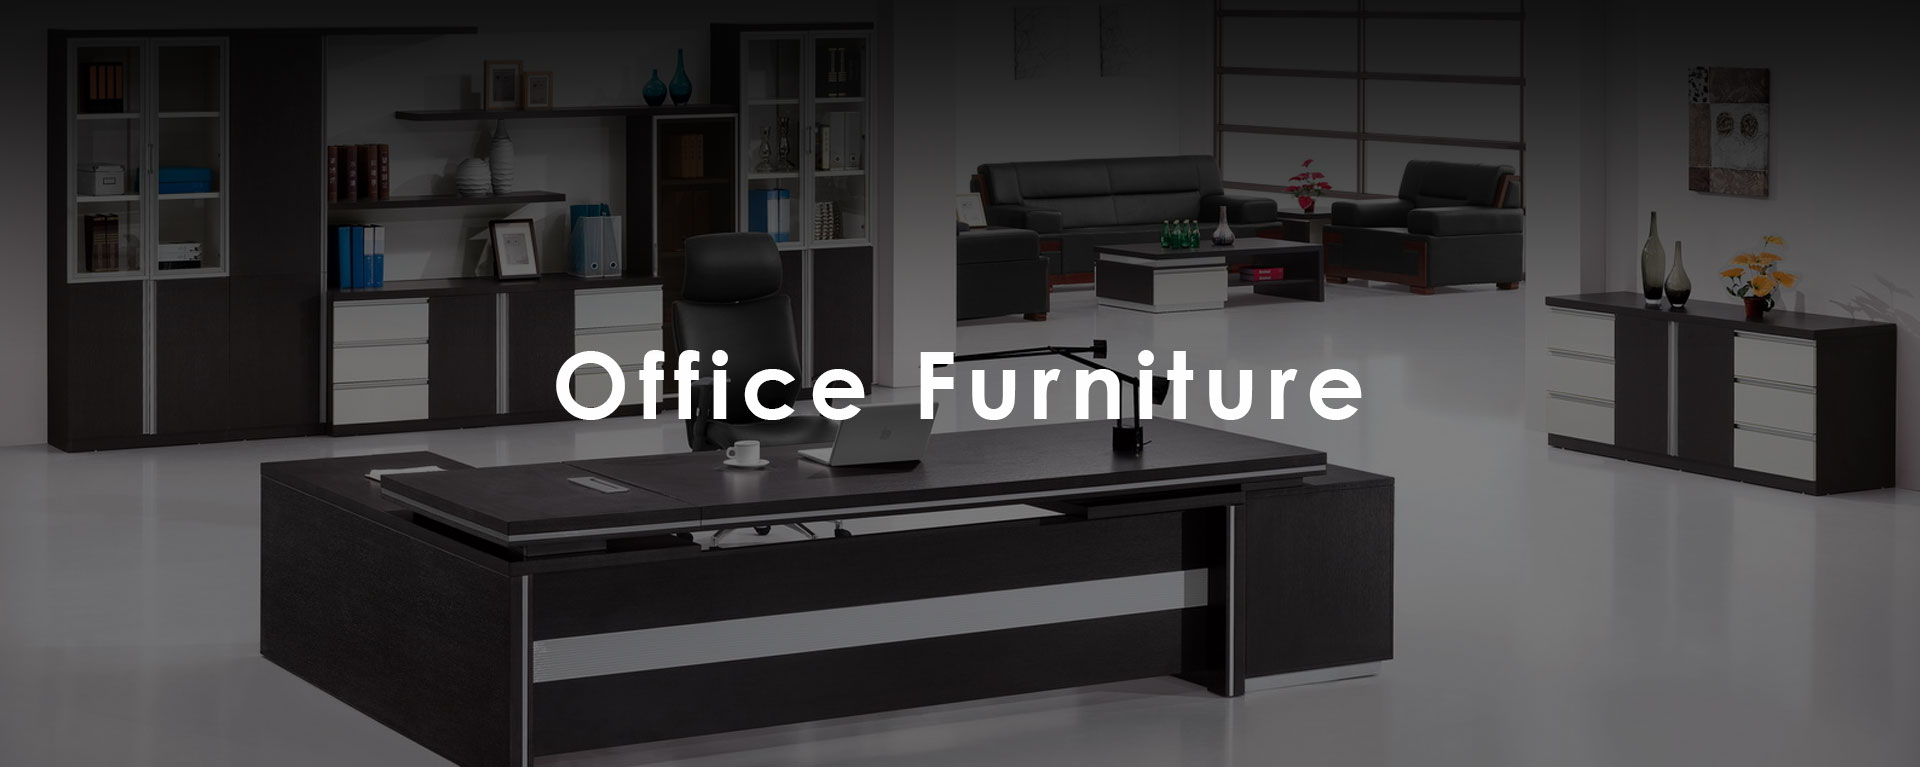 Modular Office Furniture Manufacturer